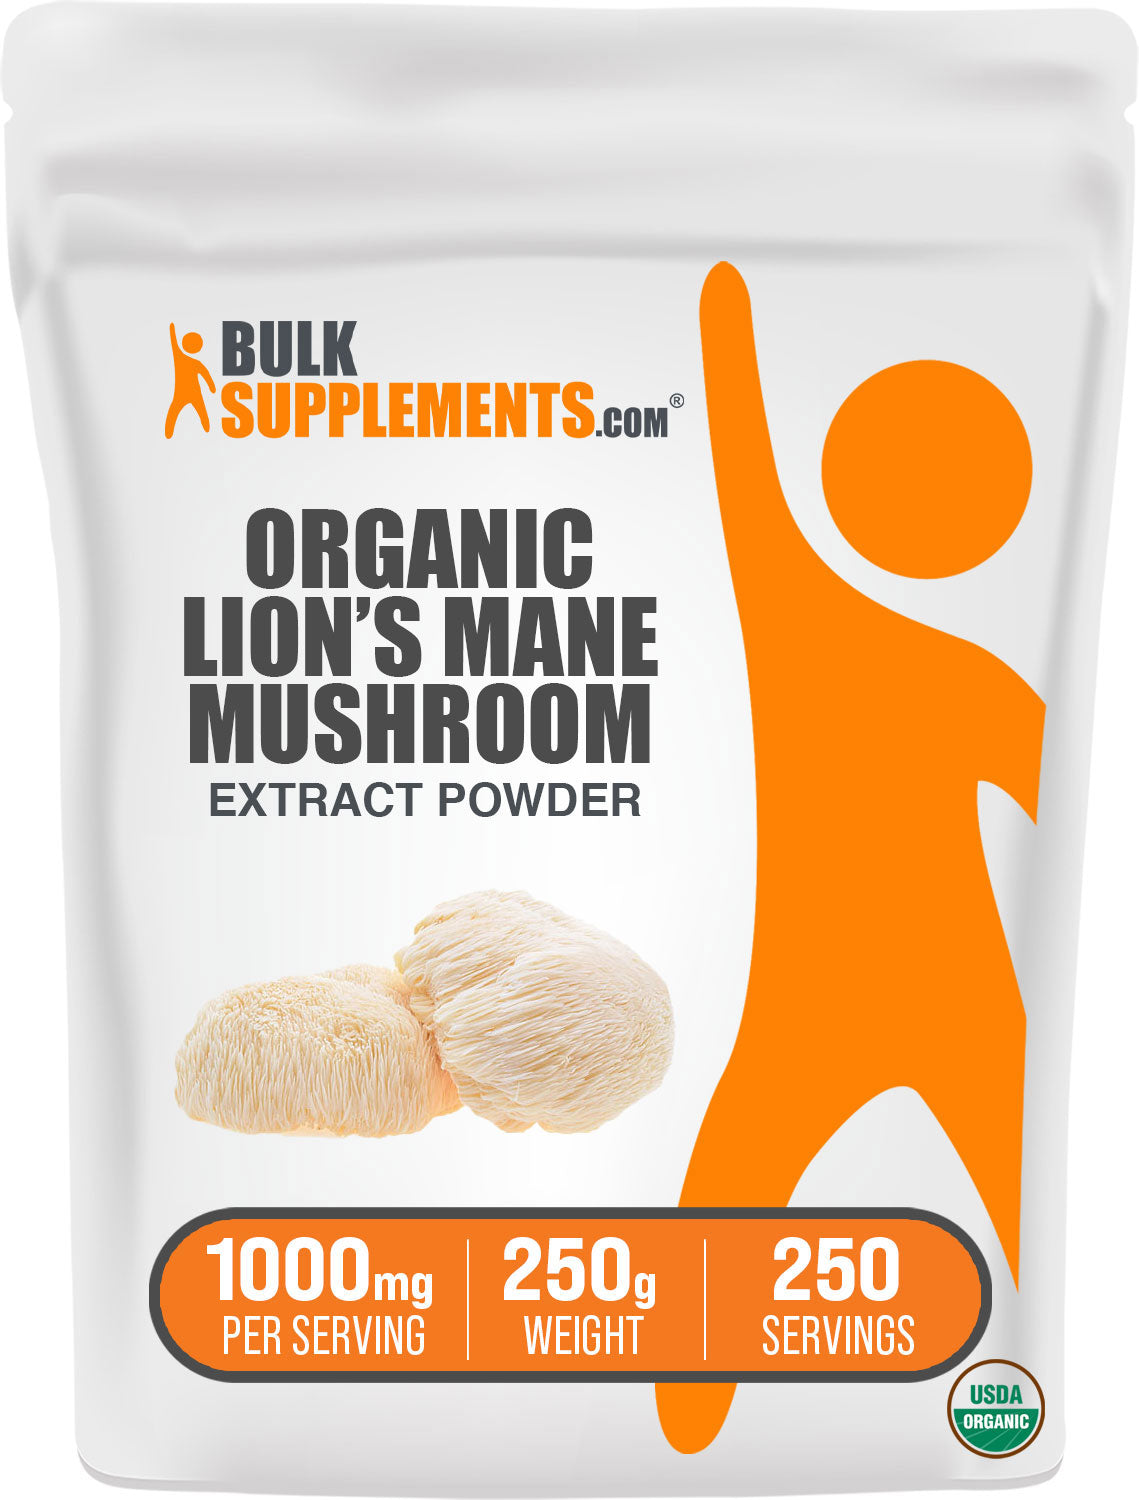 BulkSupplements.com Organic Lion's Mane Mushroom Extract Powder 250g bag